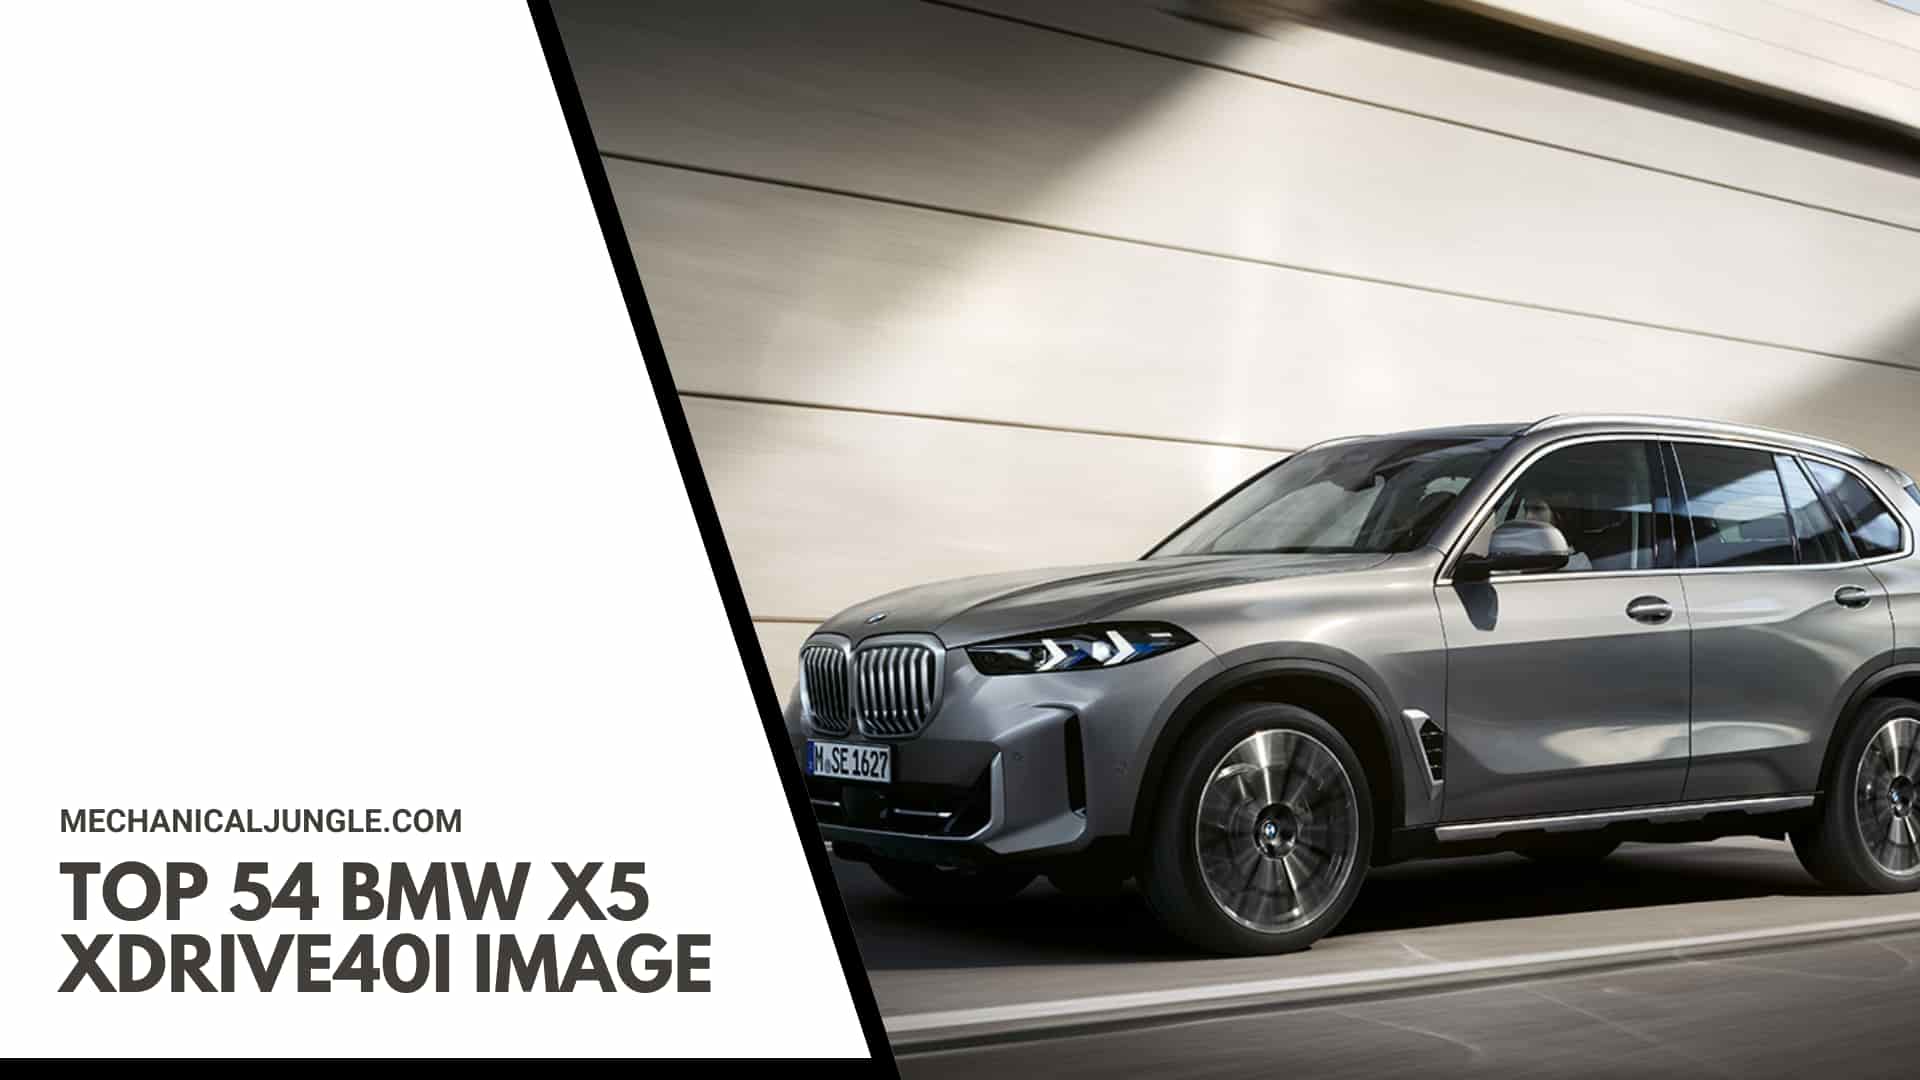 Top 54 BMW X5 xDrive40i Image